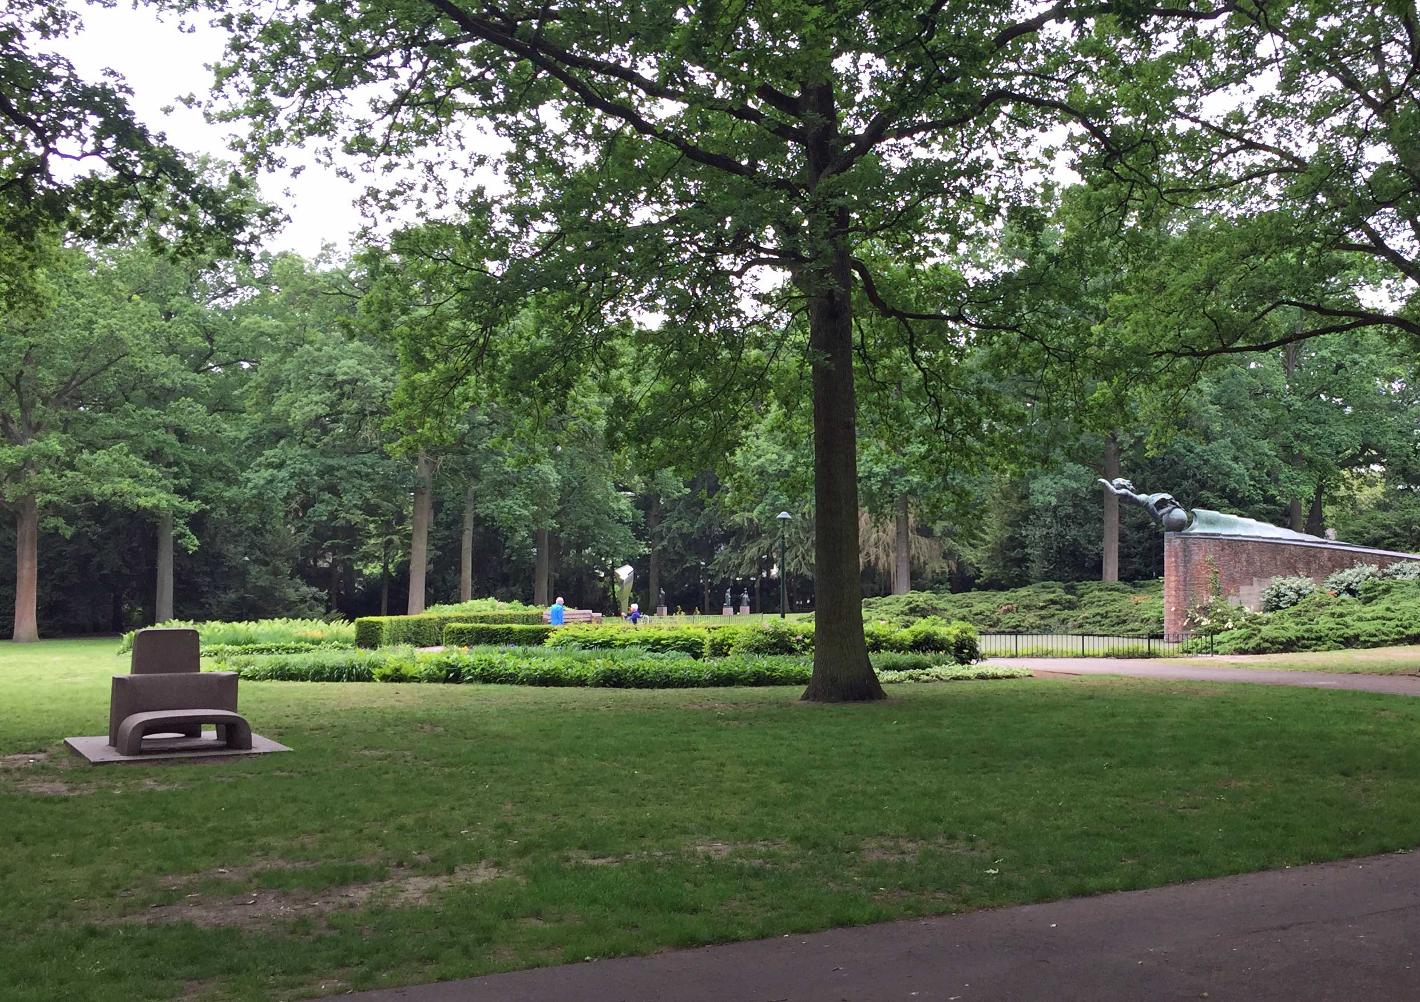 Photo Stadswandelpark in Eindhoven, View, Sights & landmarks, Neighborhood, square, park - #1